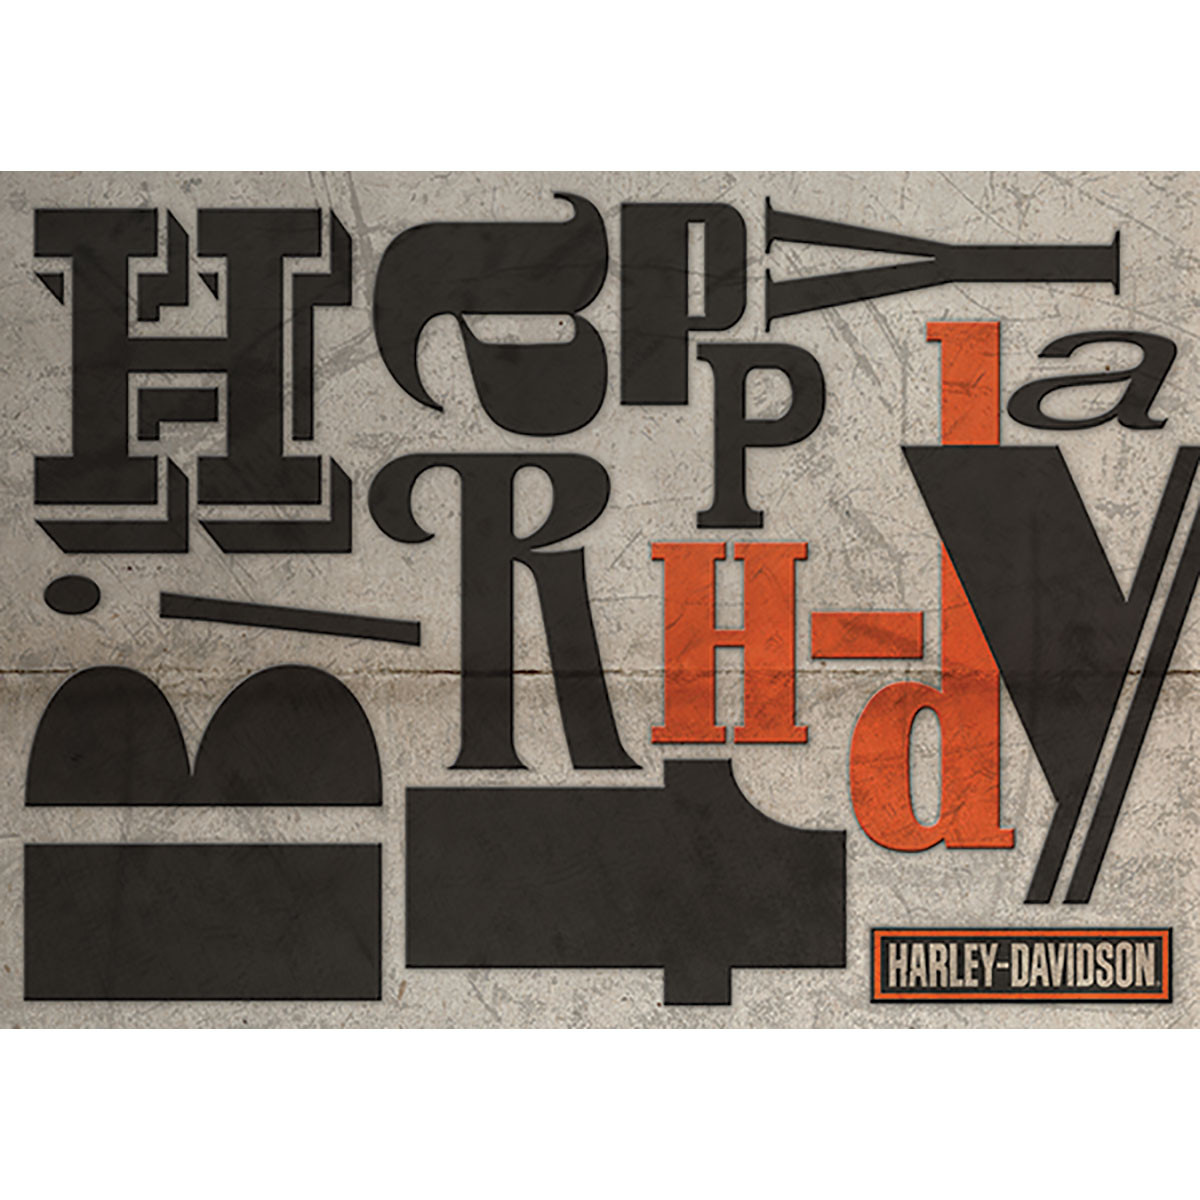 HARLEY DAVIDSON TUMBLE-BIRTHDAY CARD